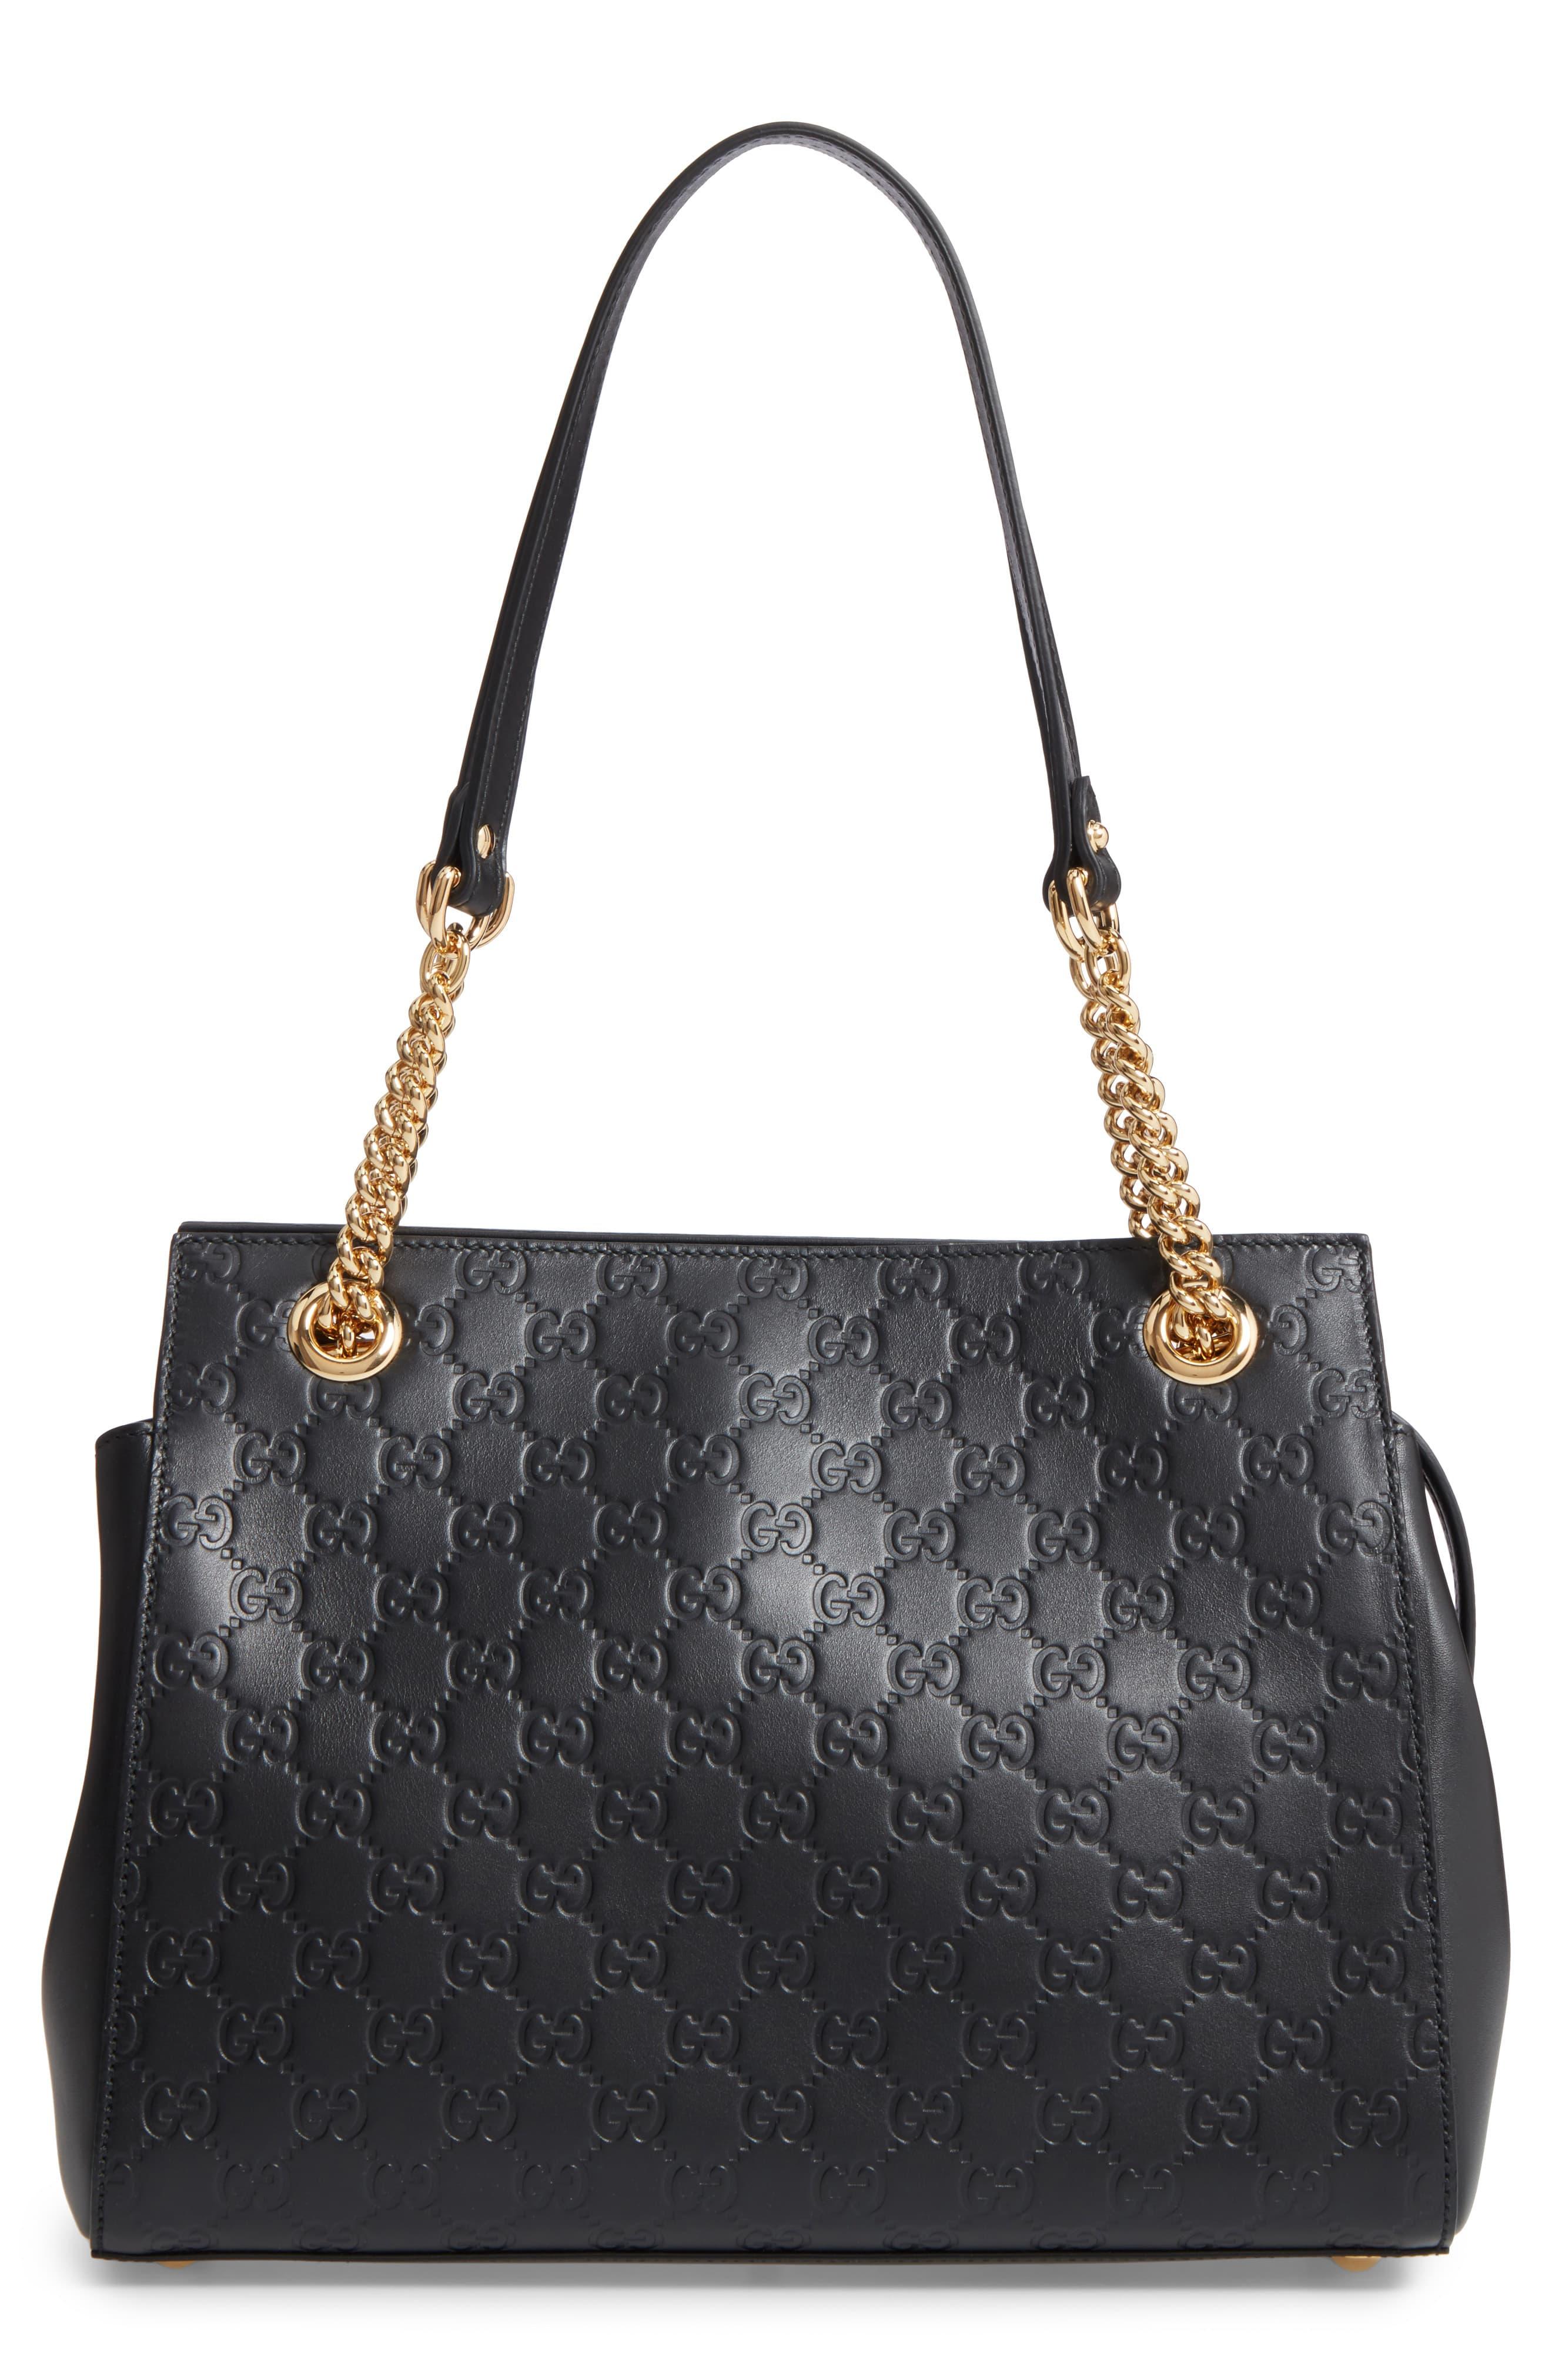 Gucci Signature Soft Leather Shoulder Bag in Black - Lyst